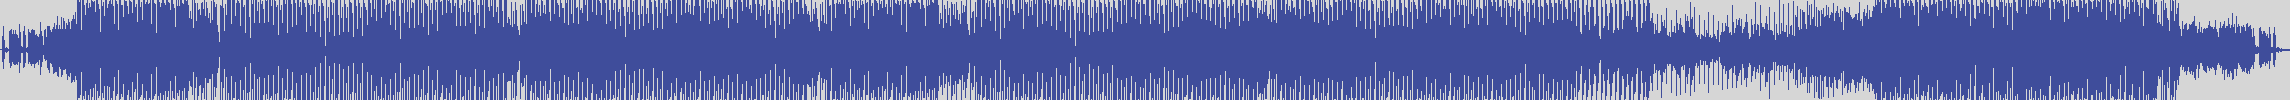 atomic_recordings [AR001] Luca Cassani, Gianni Morri - Simply Magic [Fine Touch Remix] audio wave form